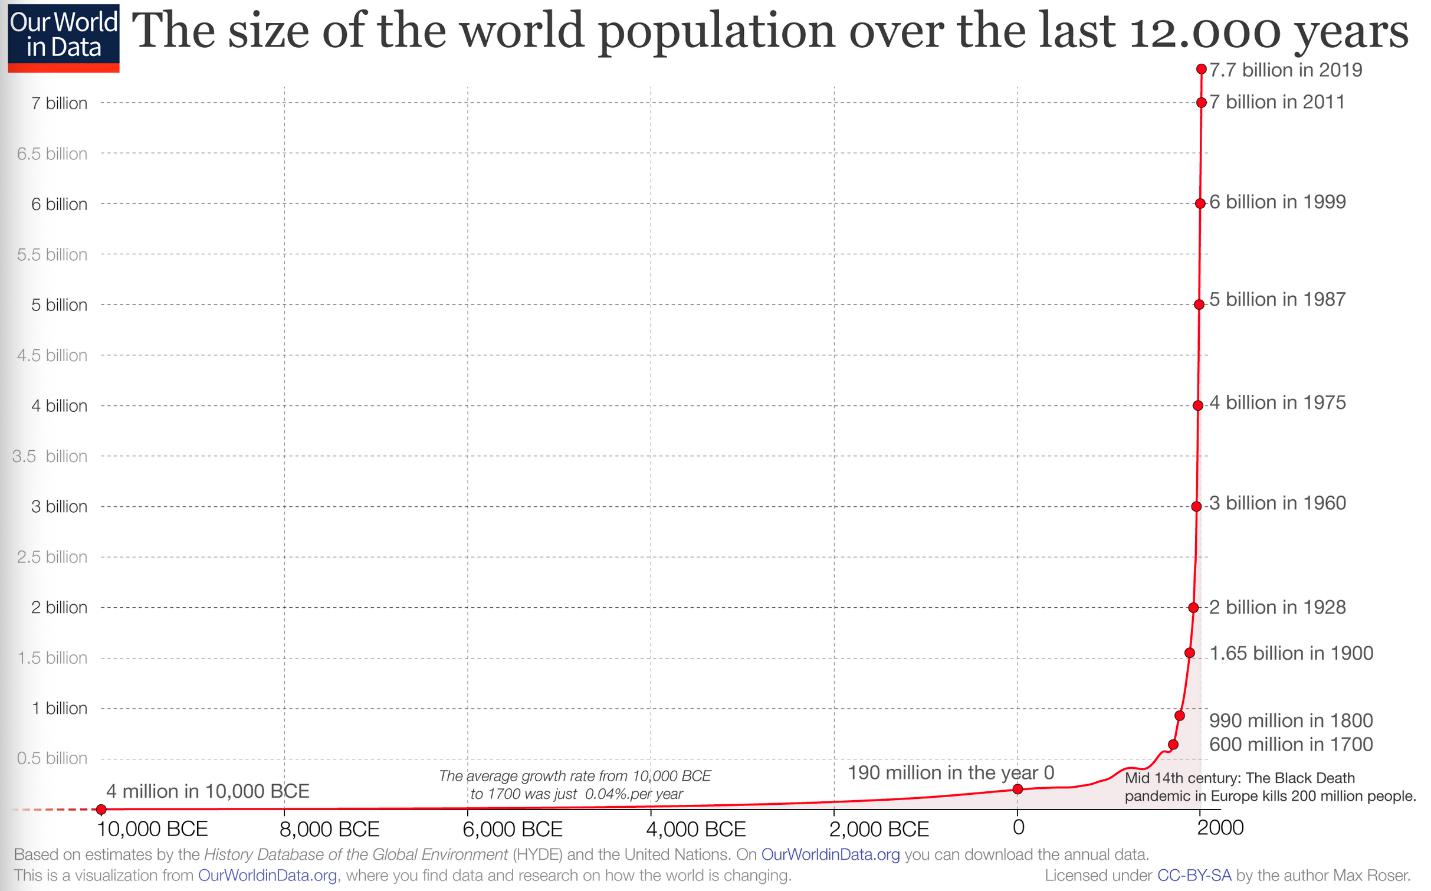 world-population